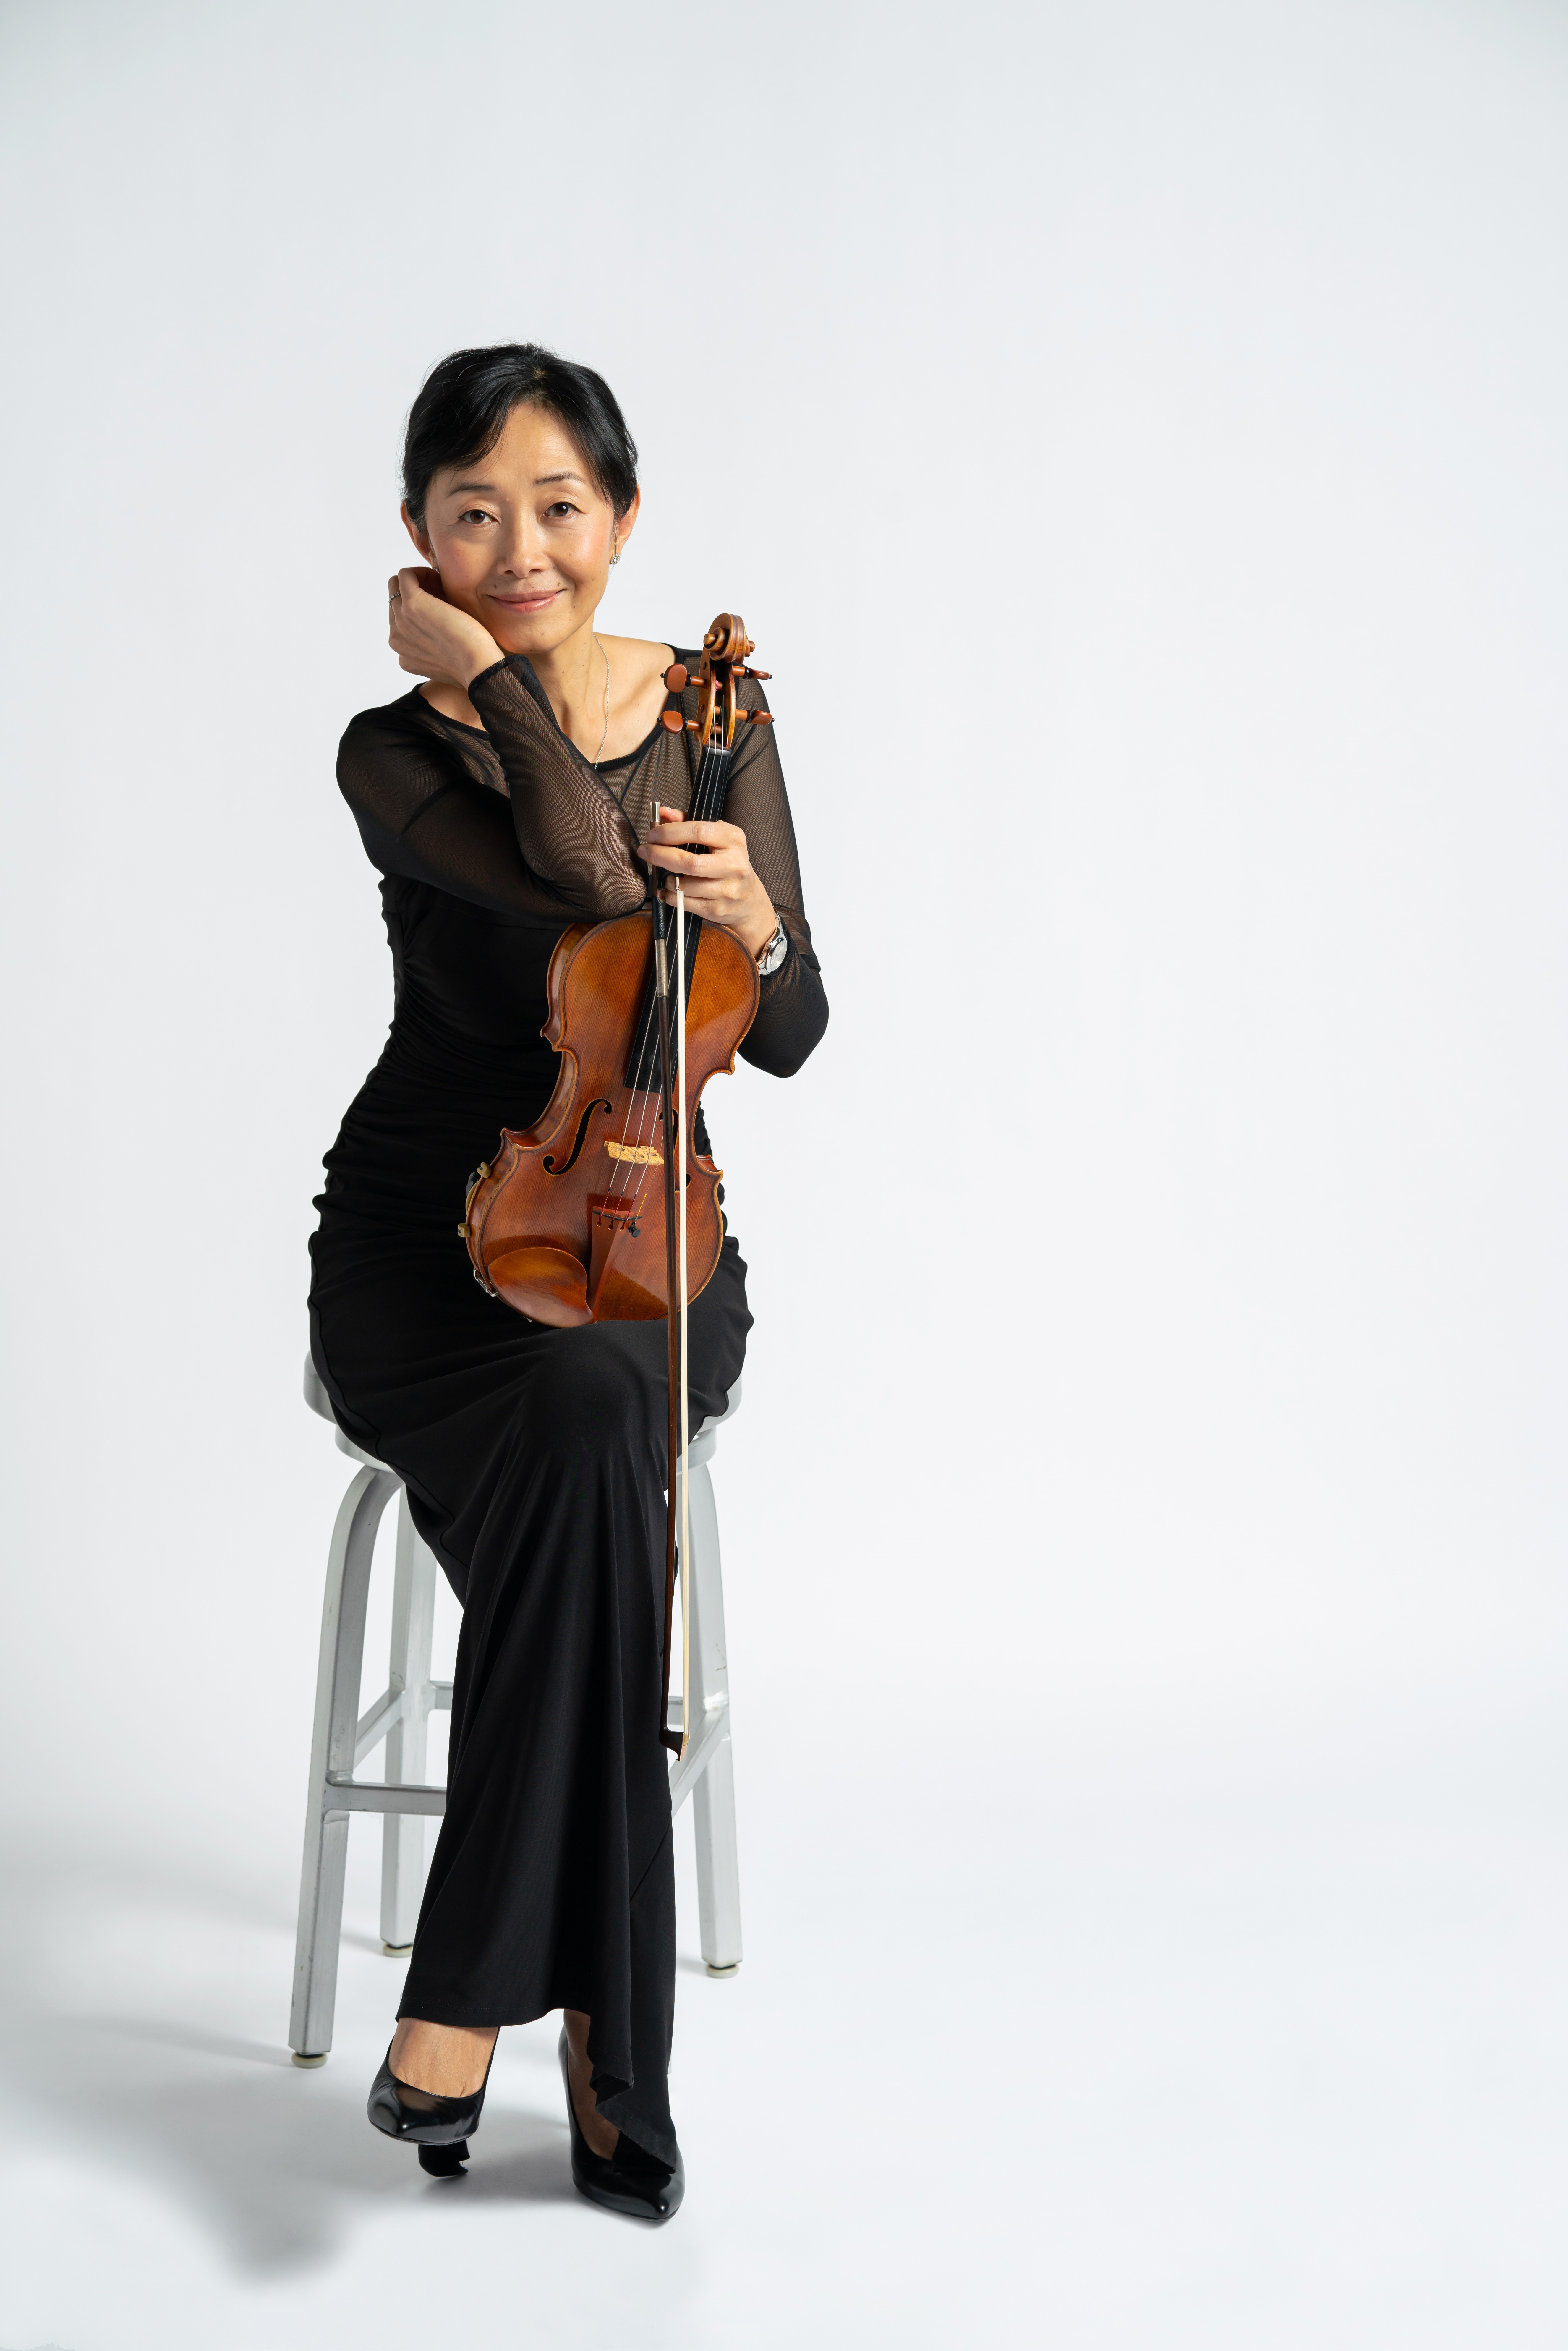 Lei Hou violin (2021)